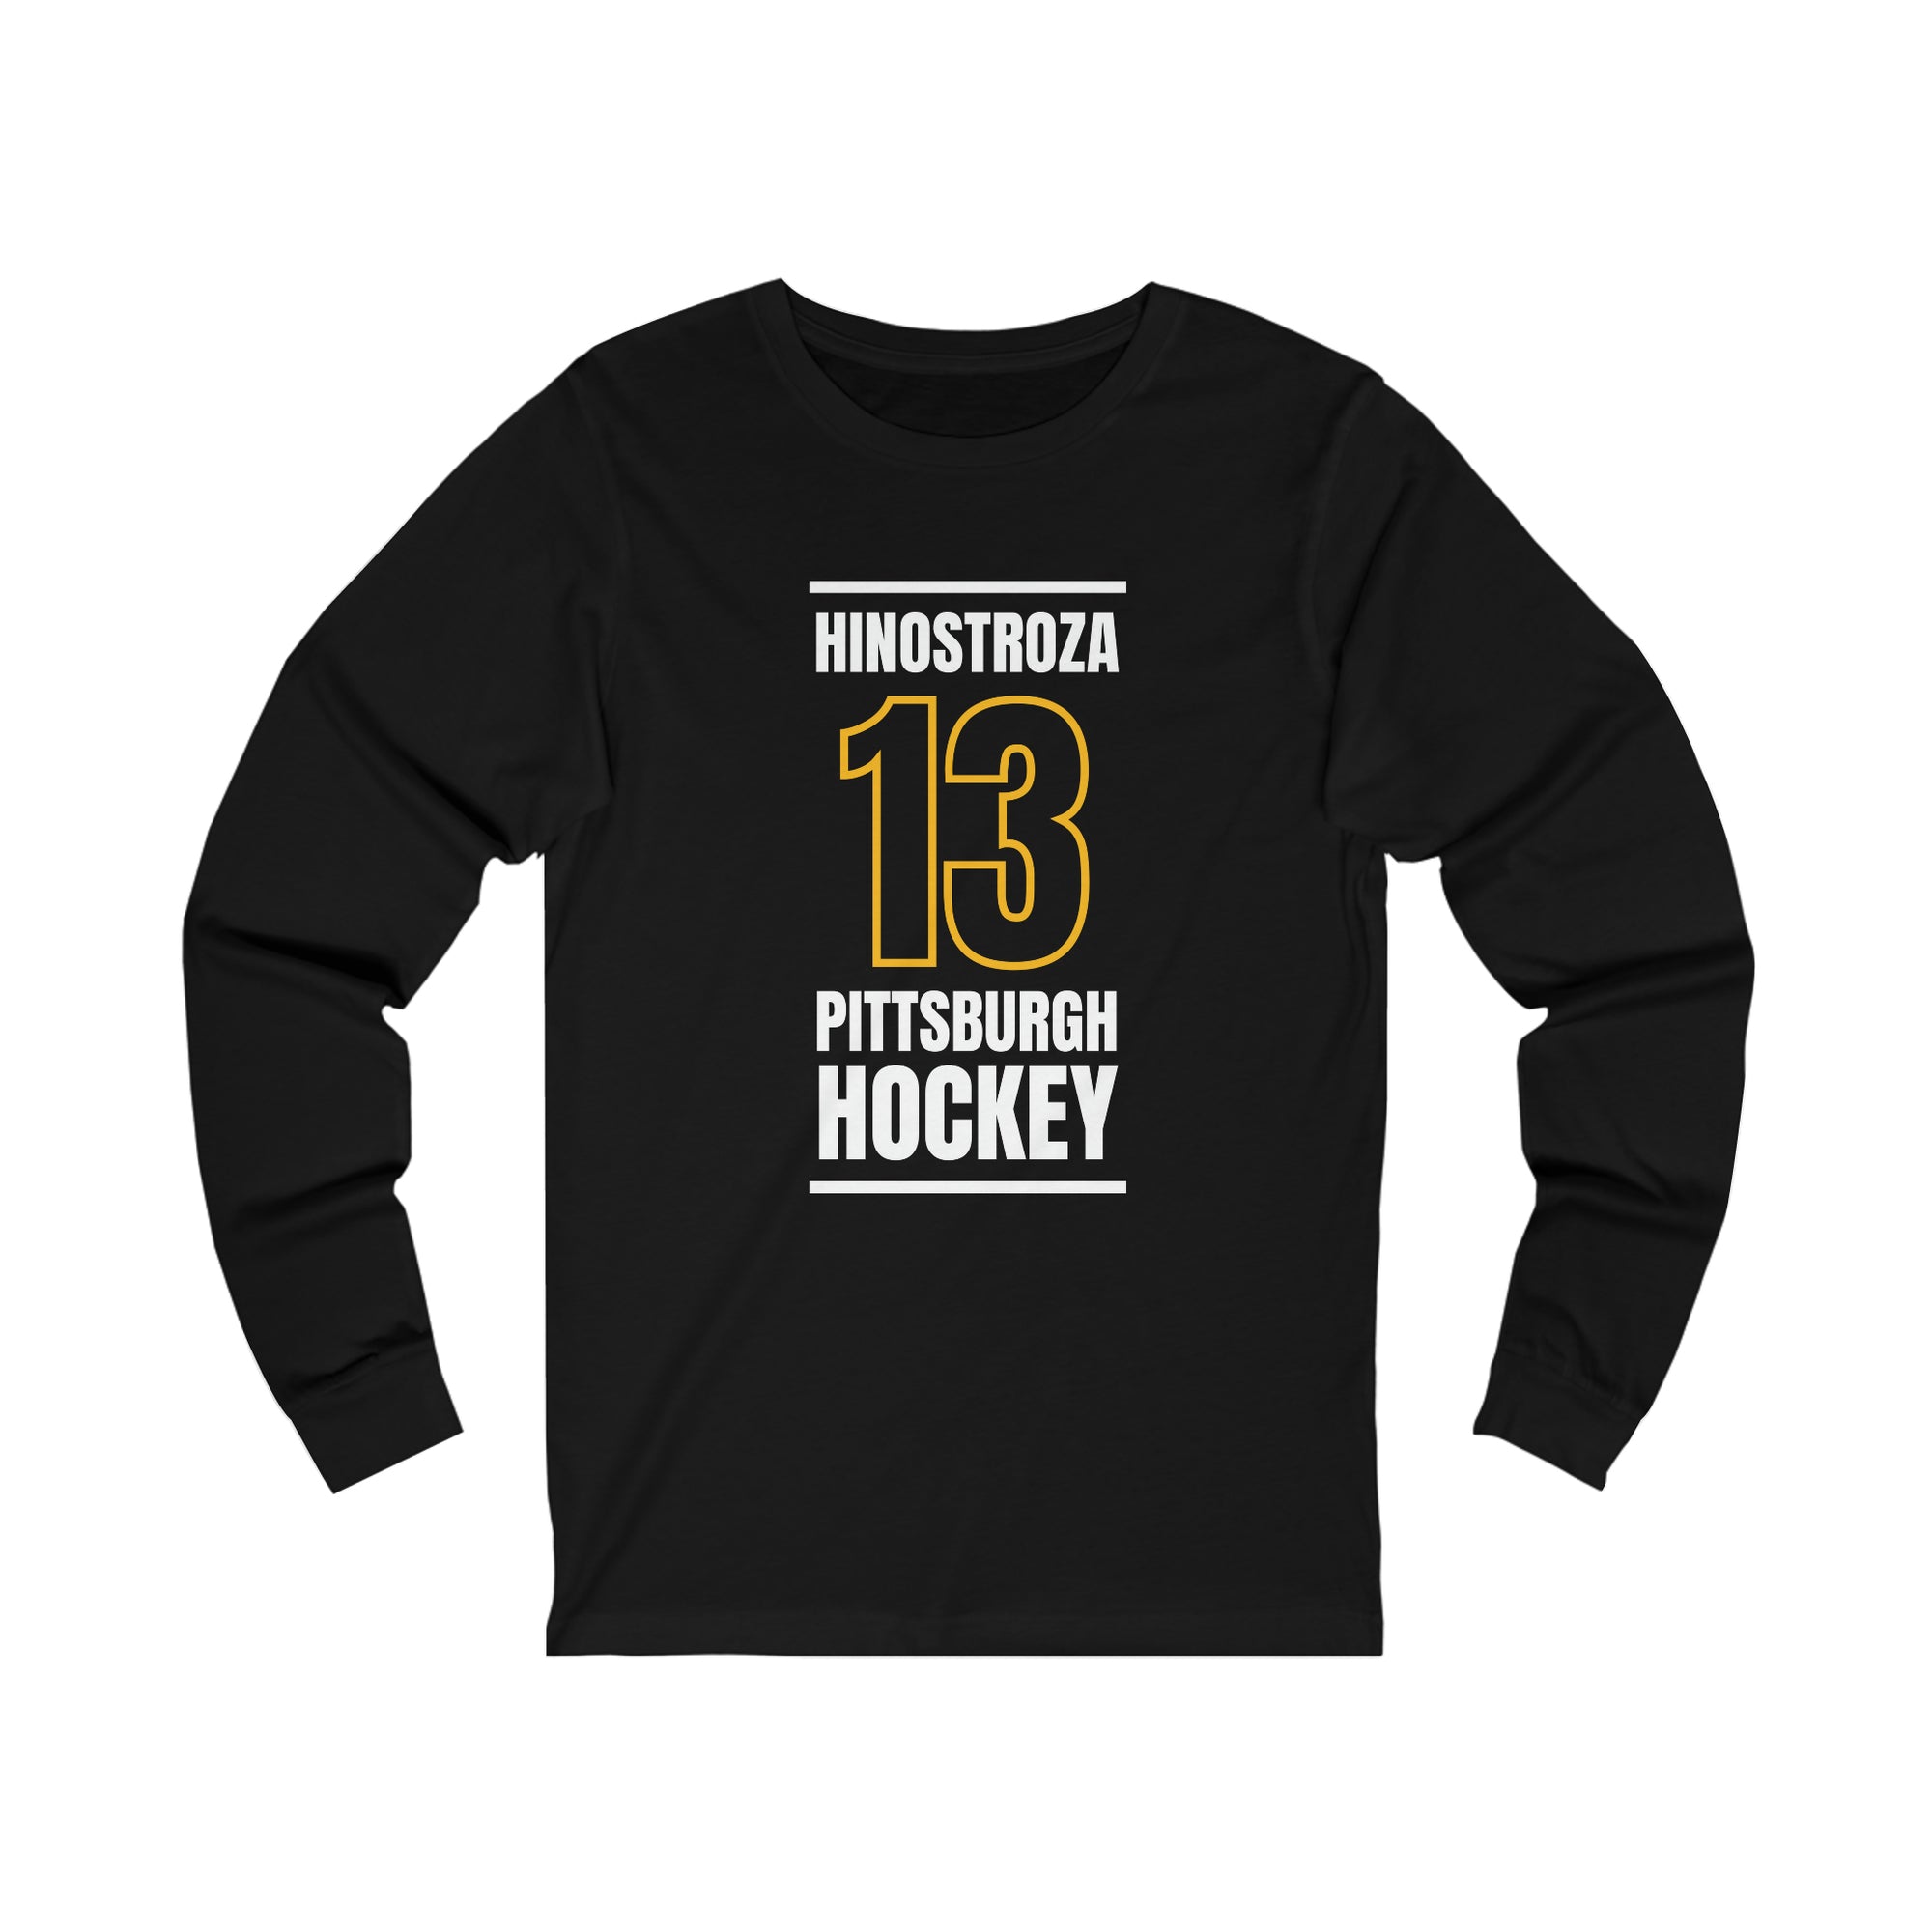 Hinostroza 13 Pittsburgh Hockey Black Vertical Design Unisex Jersey Long Sleeve Shirt